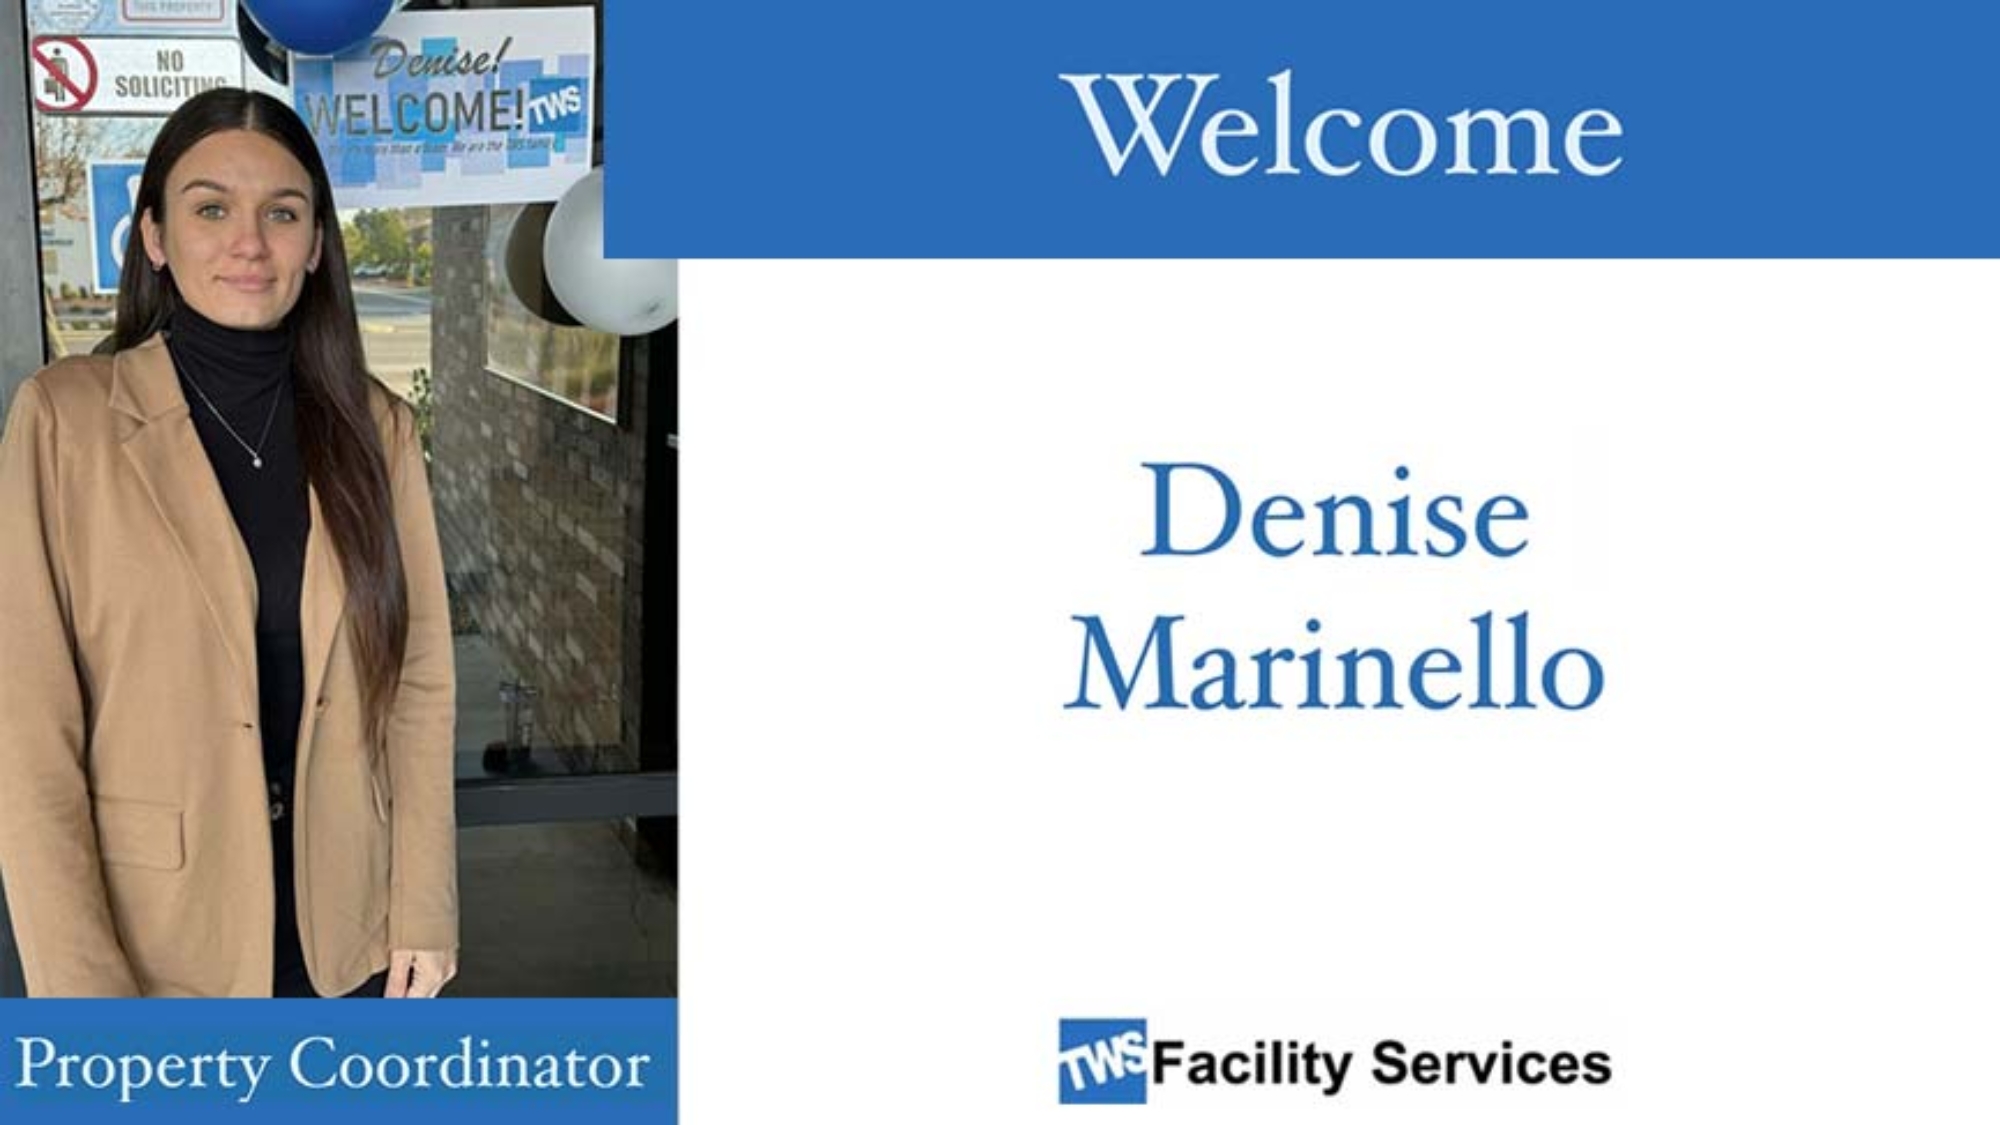 TWS-Welcome-Denise-Marinello